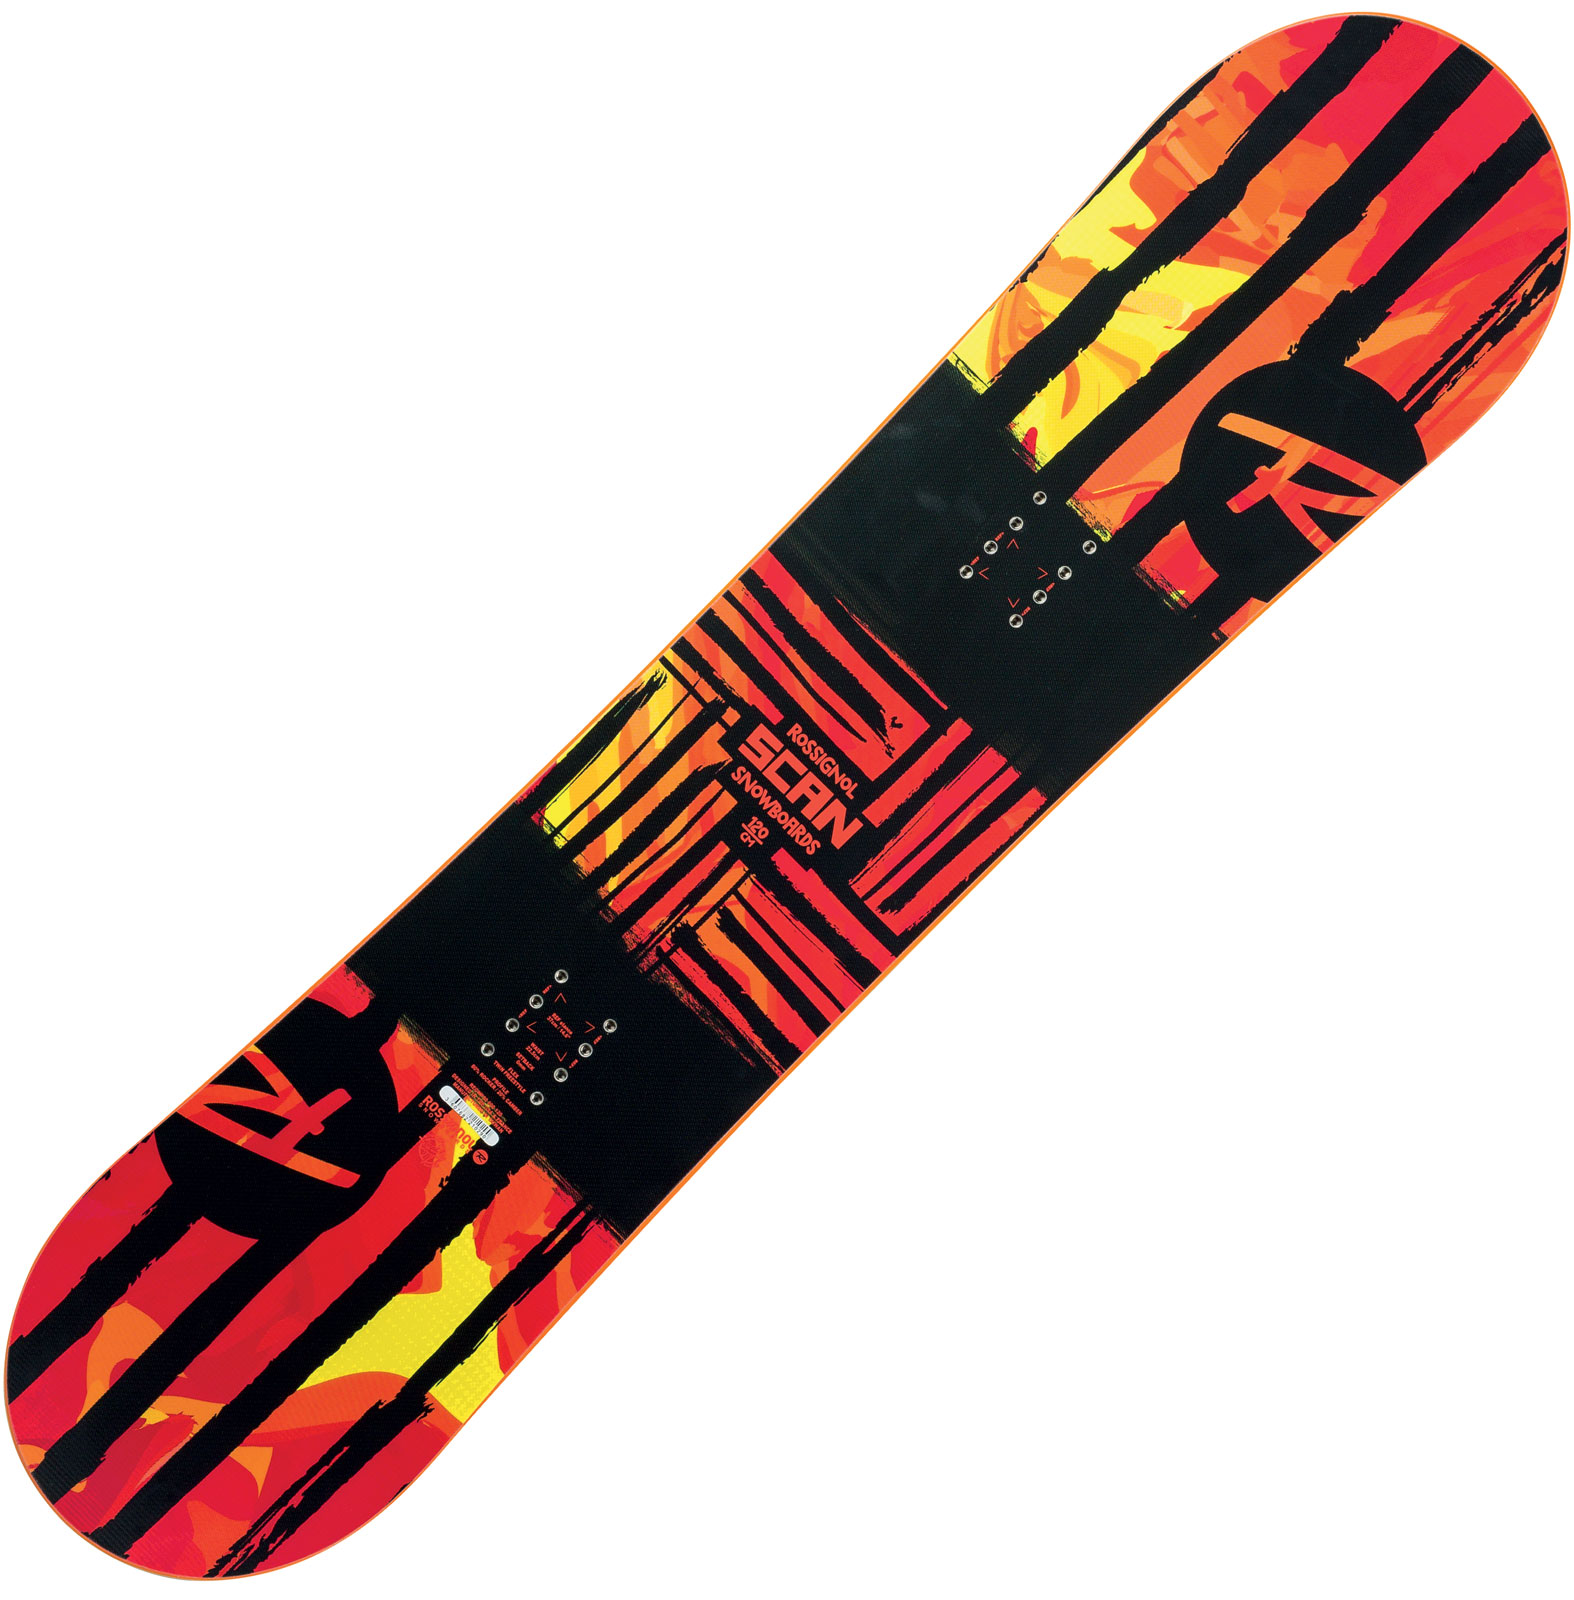 Snowboard Set